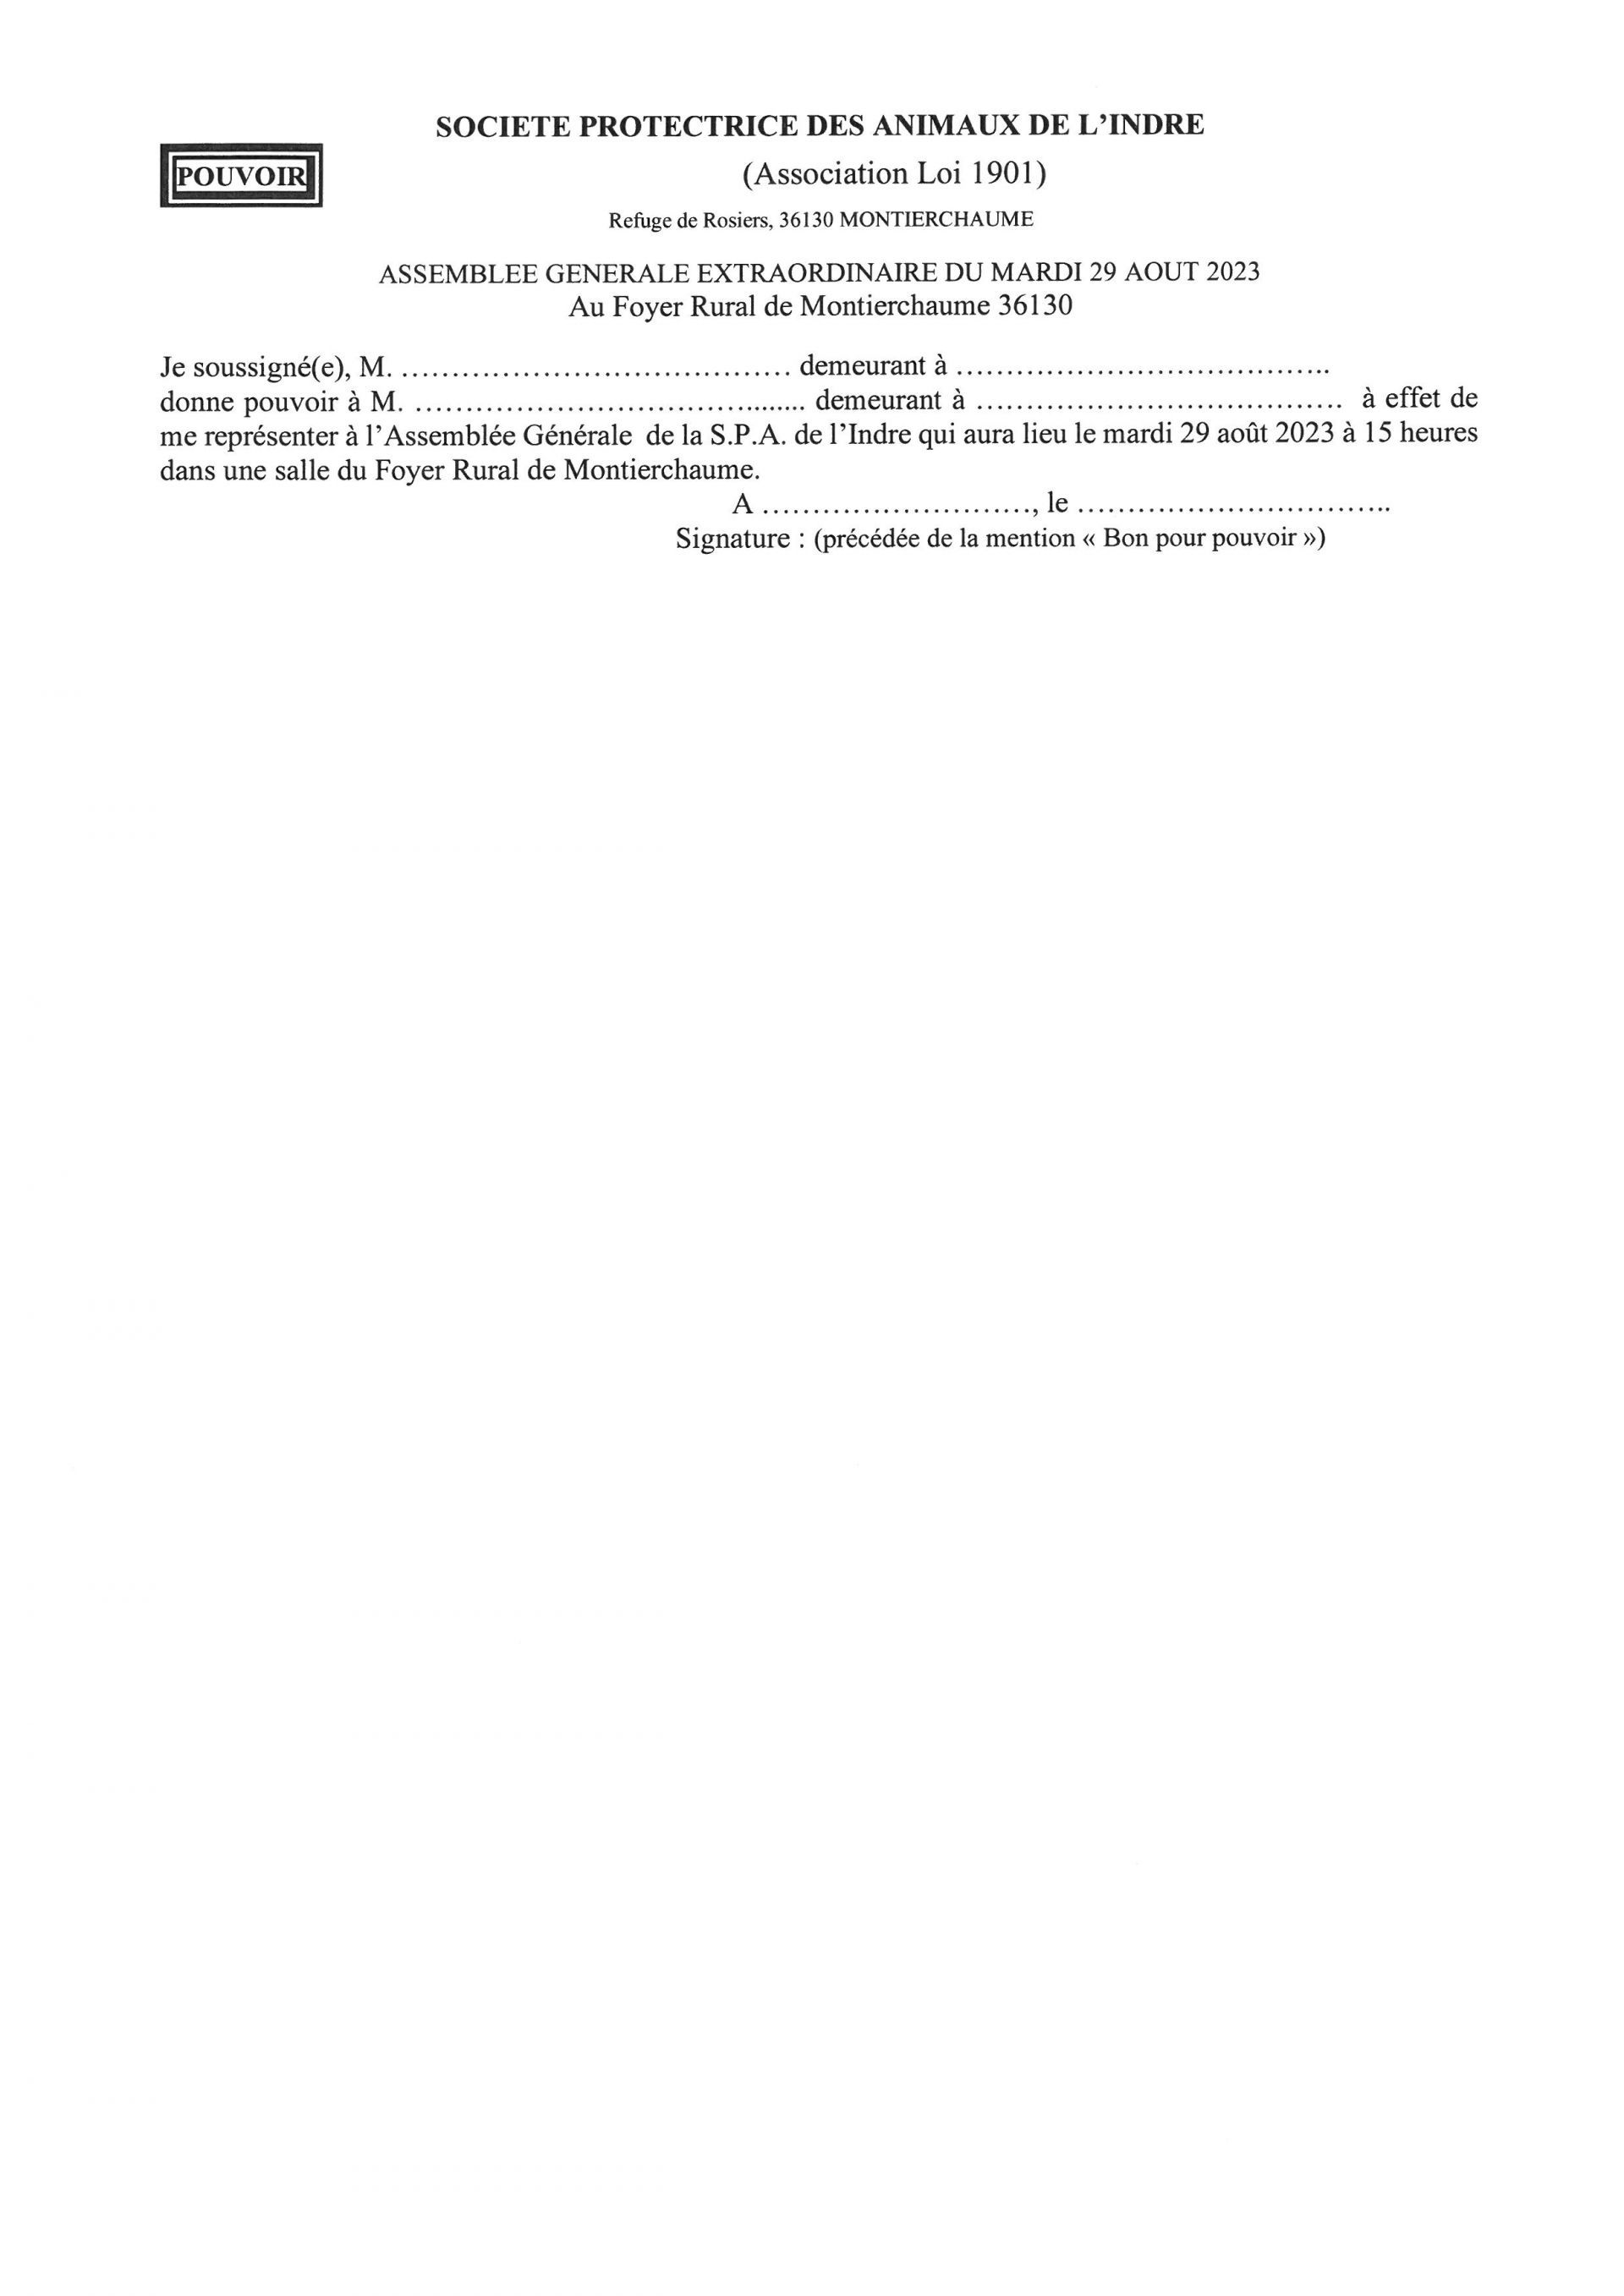 ASSEMBLÉE GÉNÉRALE EXTRAORDINAIRE - MARDI 29 AOÛT 2023